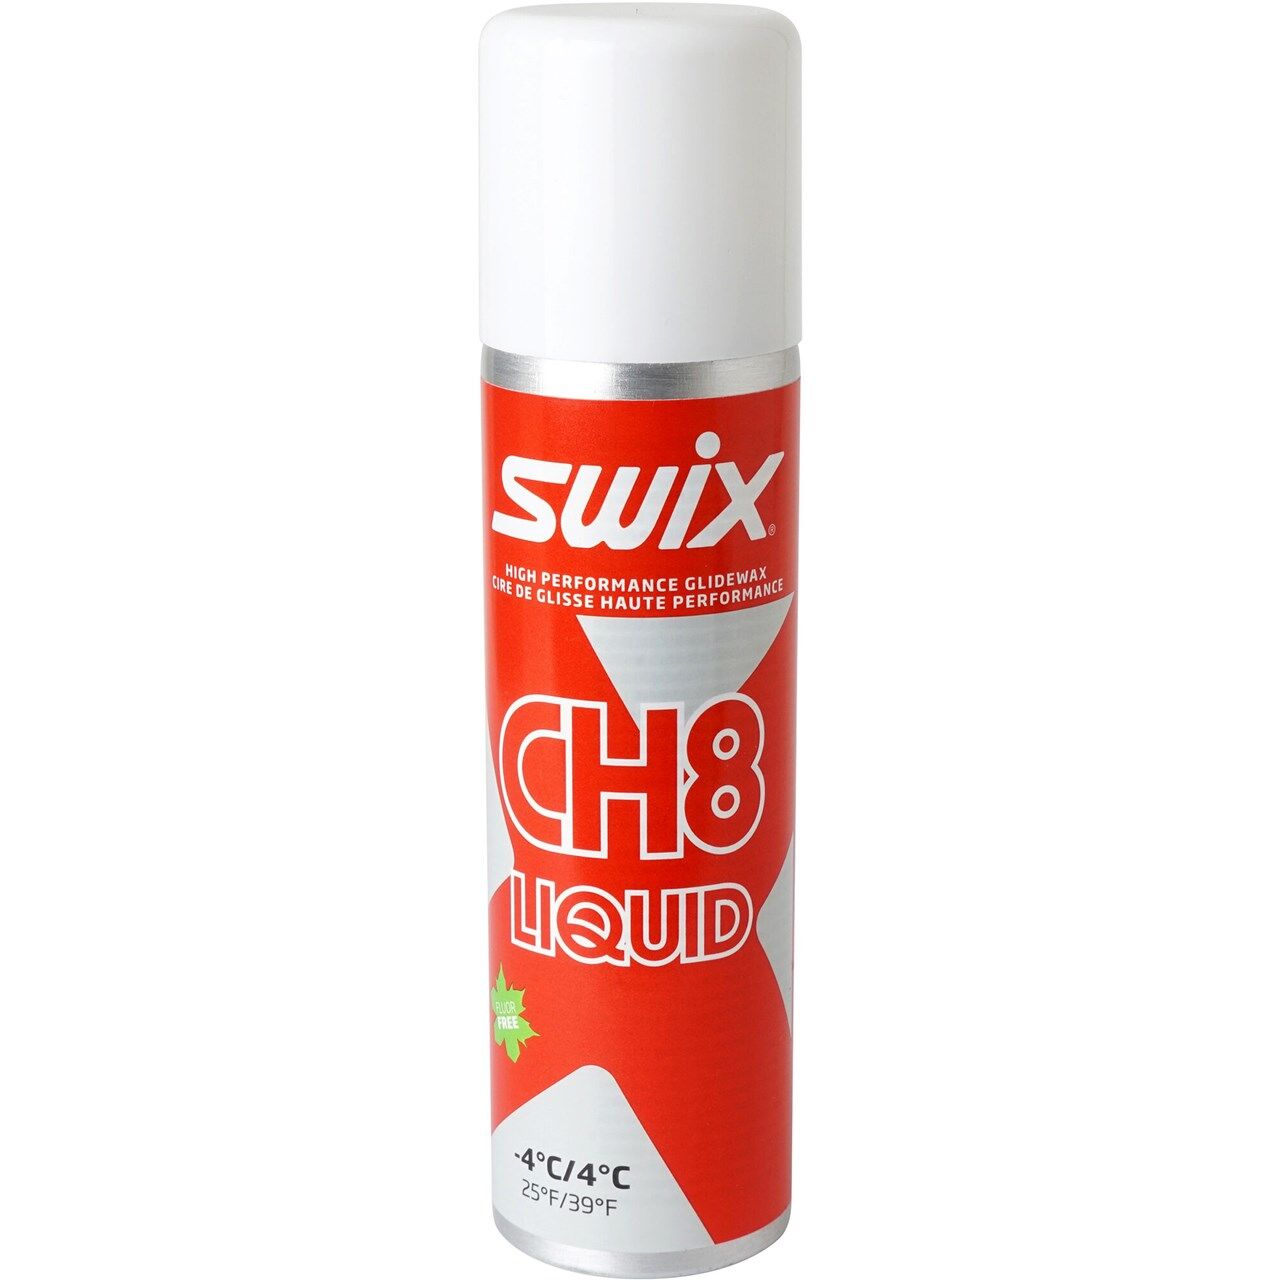 Swix CH08X Liquid -4C/+4C (125ml) - Heisswachs